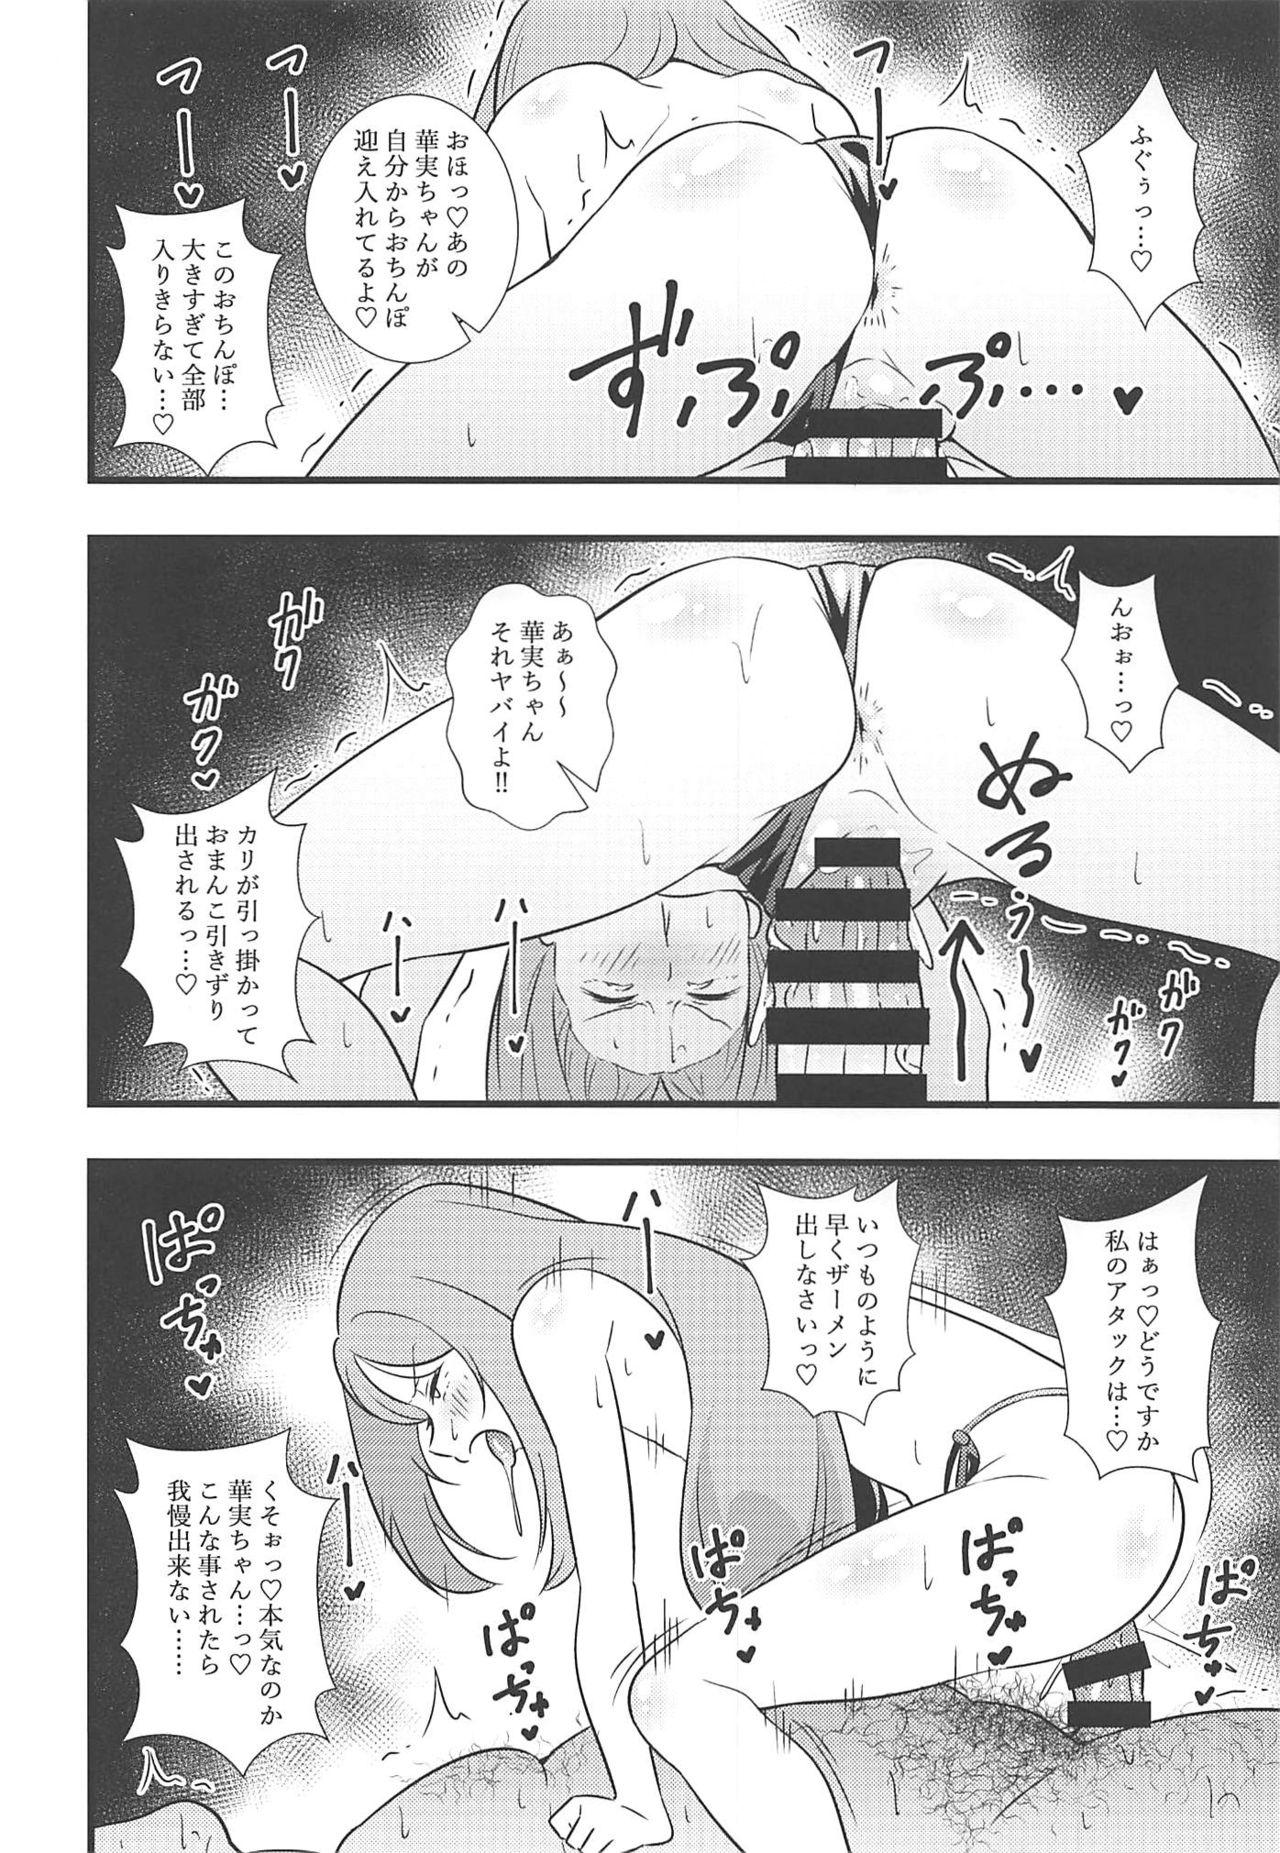 Twinkstudios Shouten! Harame Ore no Ragna Rock!! Risei ga Buttobu made Tanetsuke Rape - Battle spirits Amateur Sex - Page 11